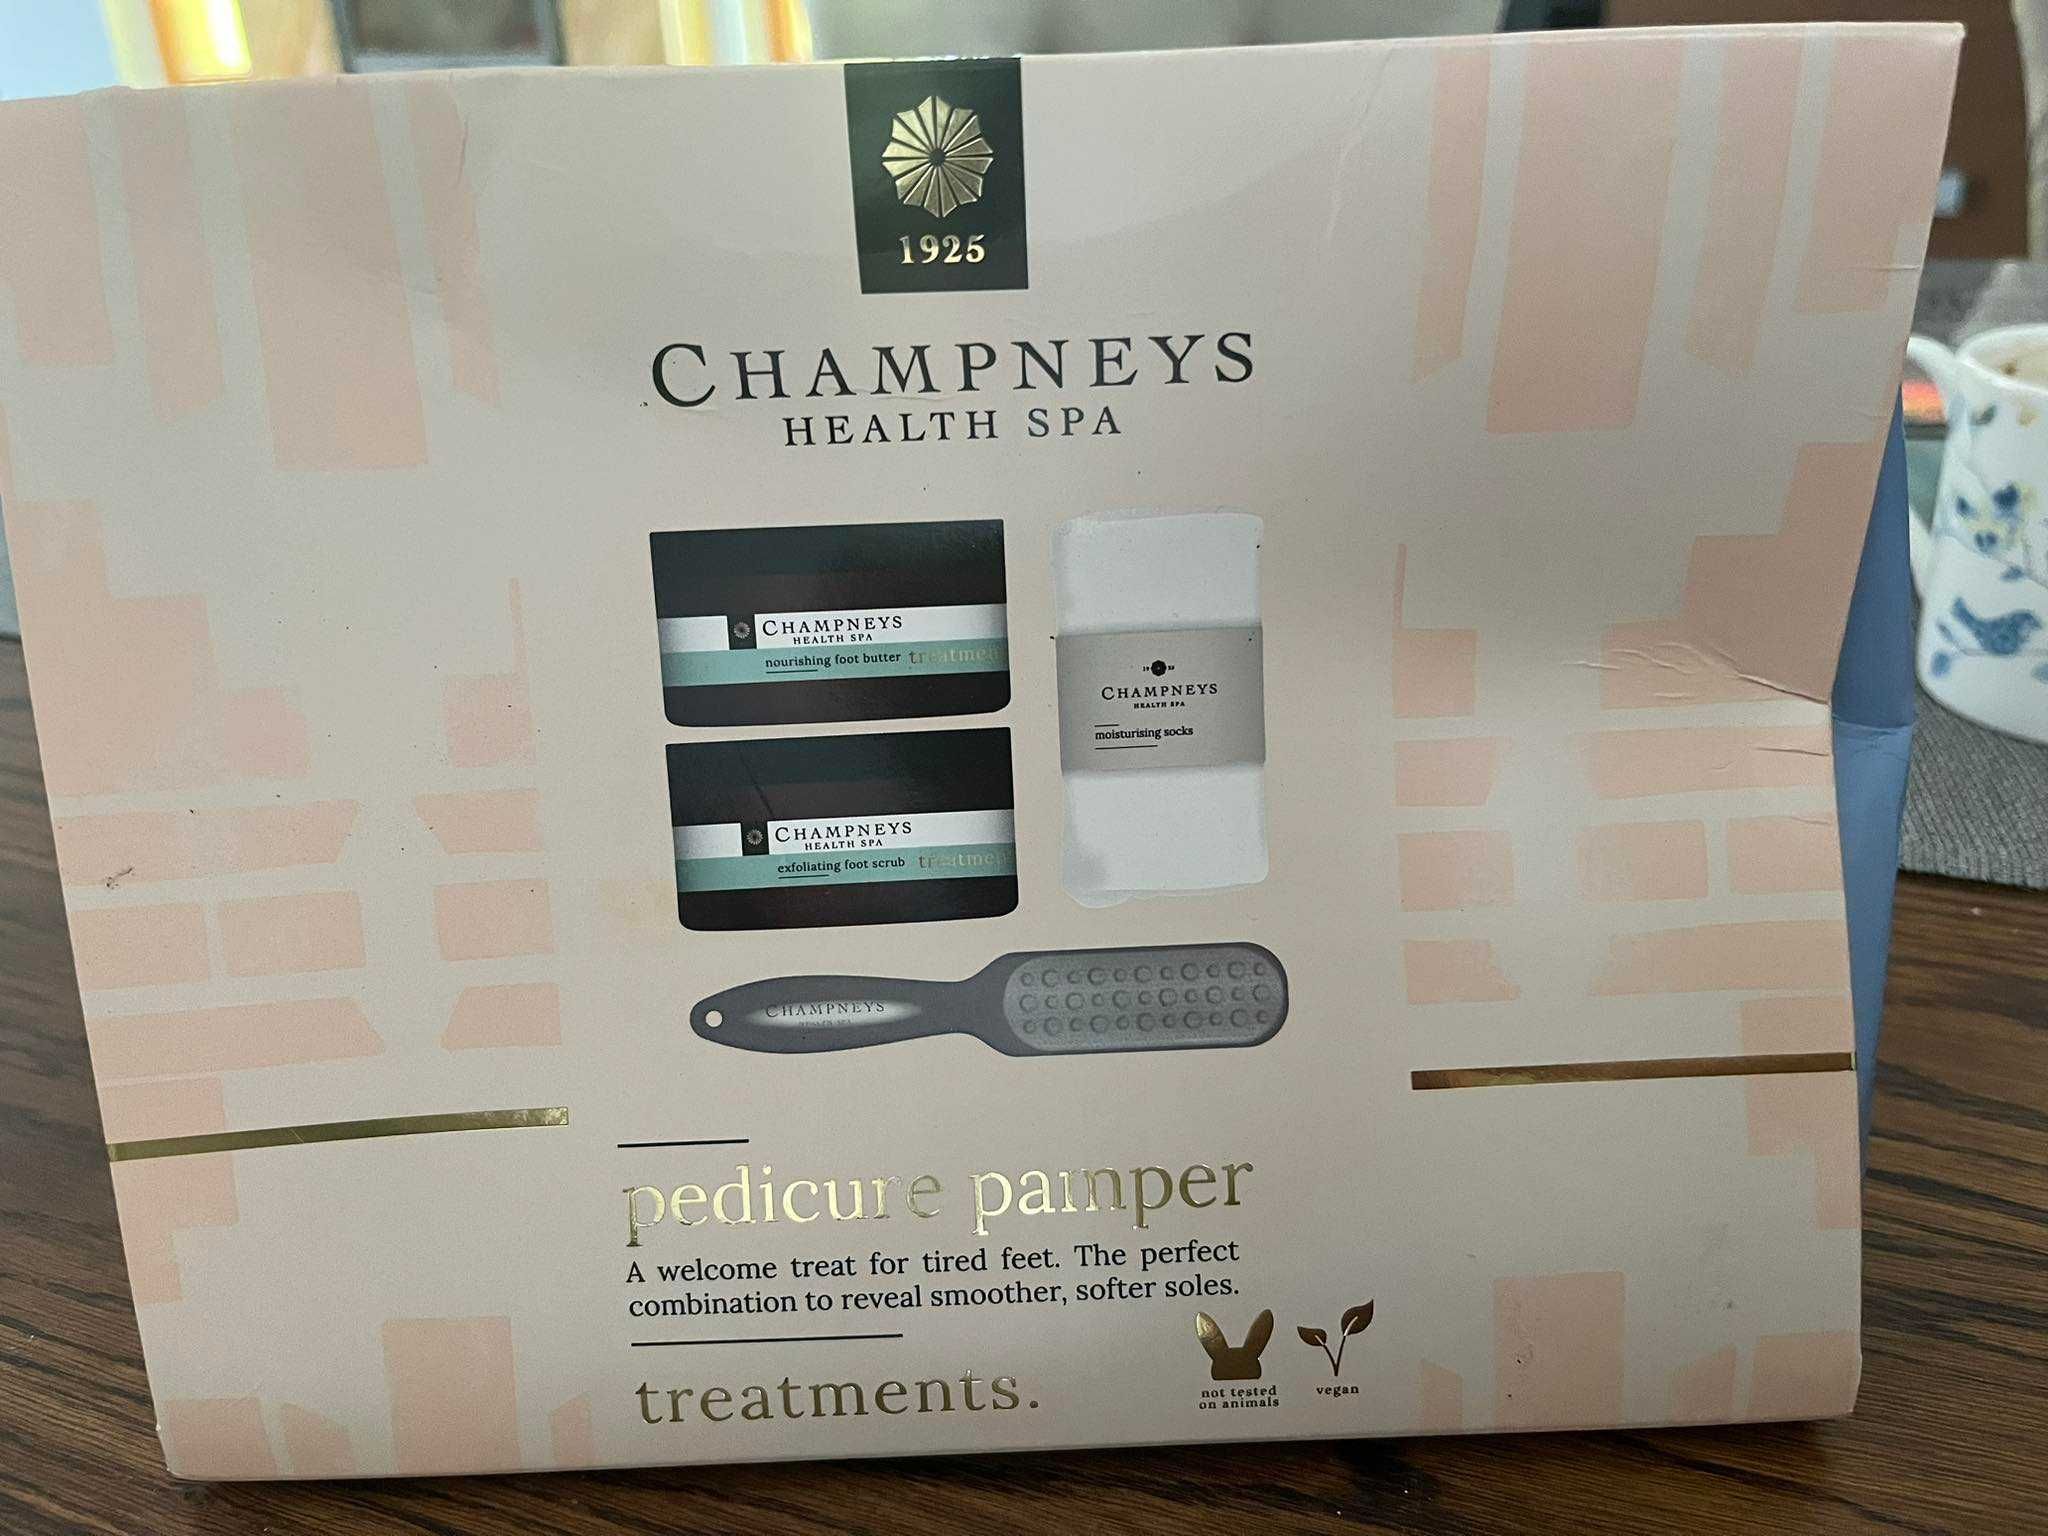 Champneys Health Spa Pedicure Pamper zestaw